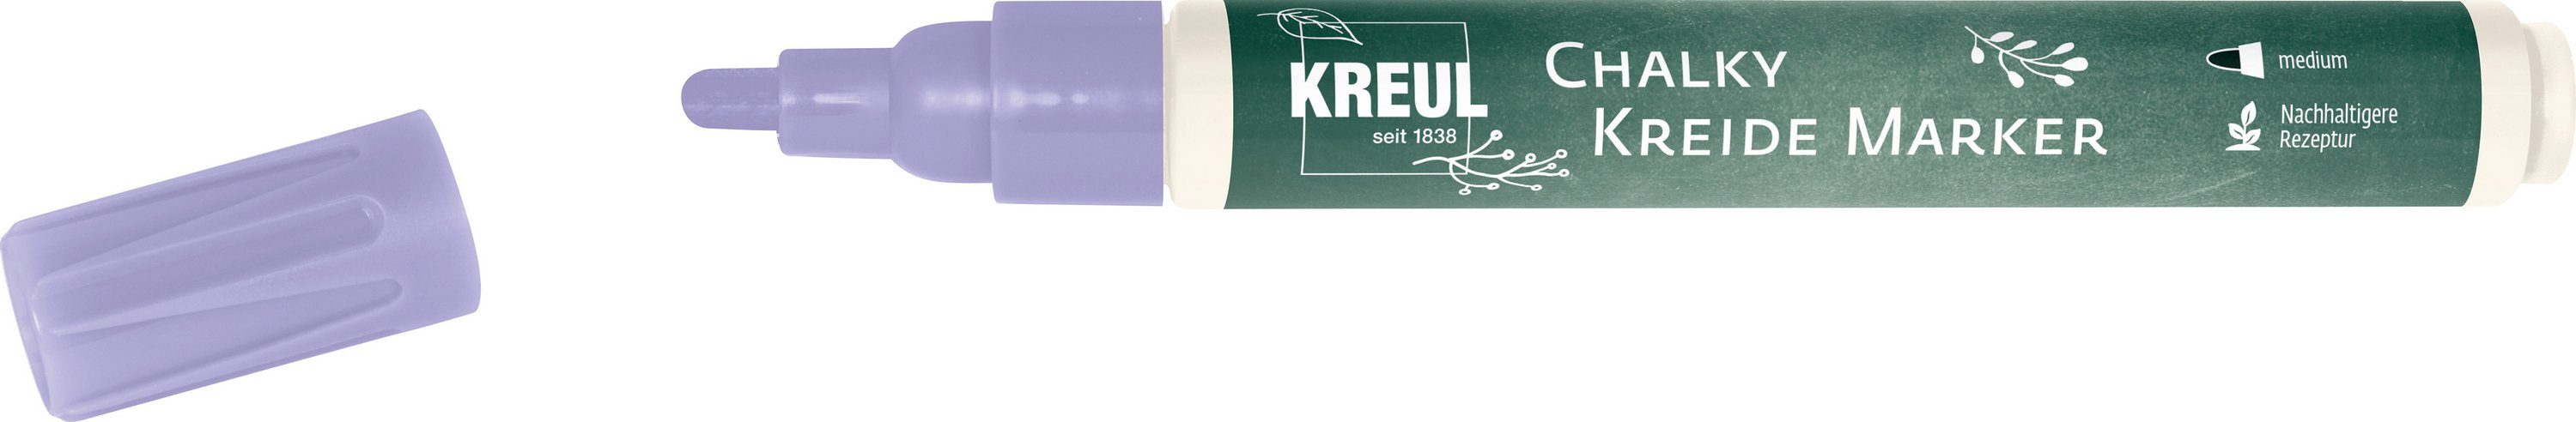 Kreul Kreidemarker Chalky, 2-3mm Strichstärke Dark Lavender